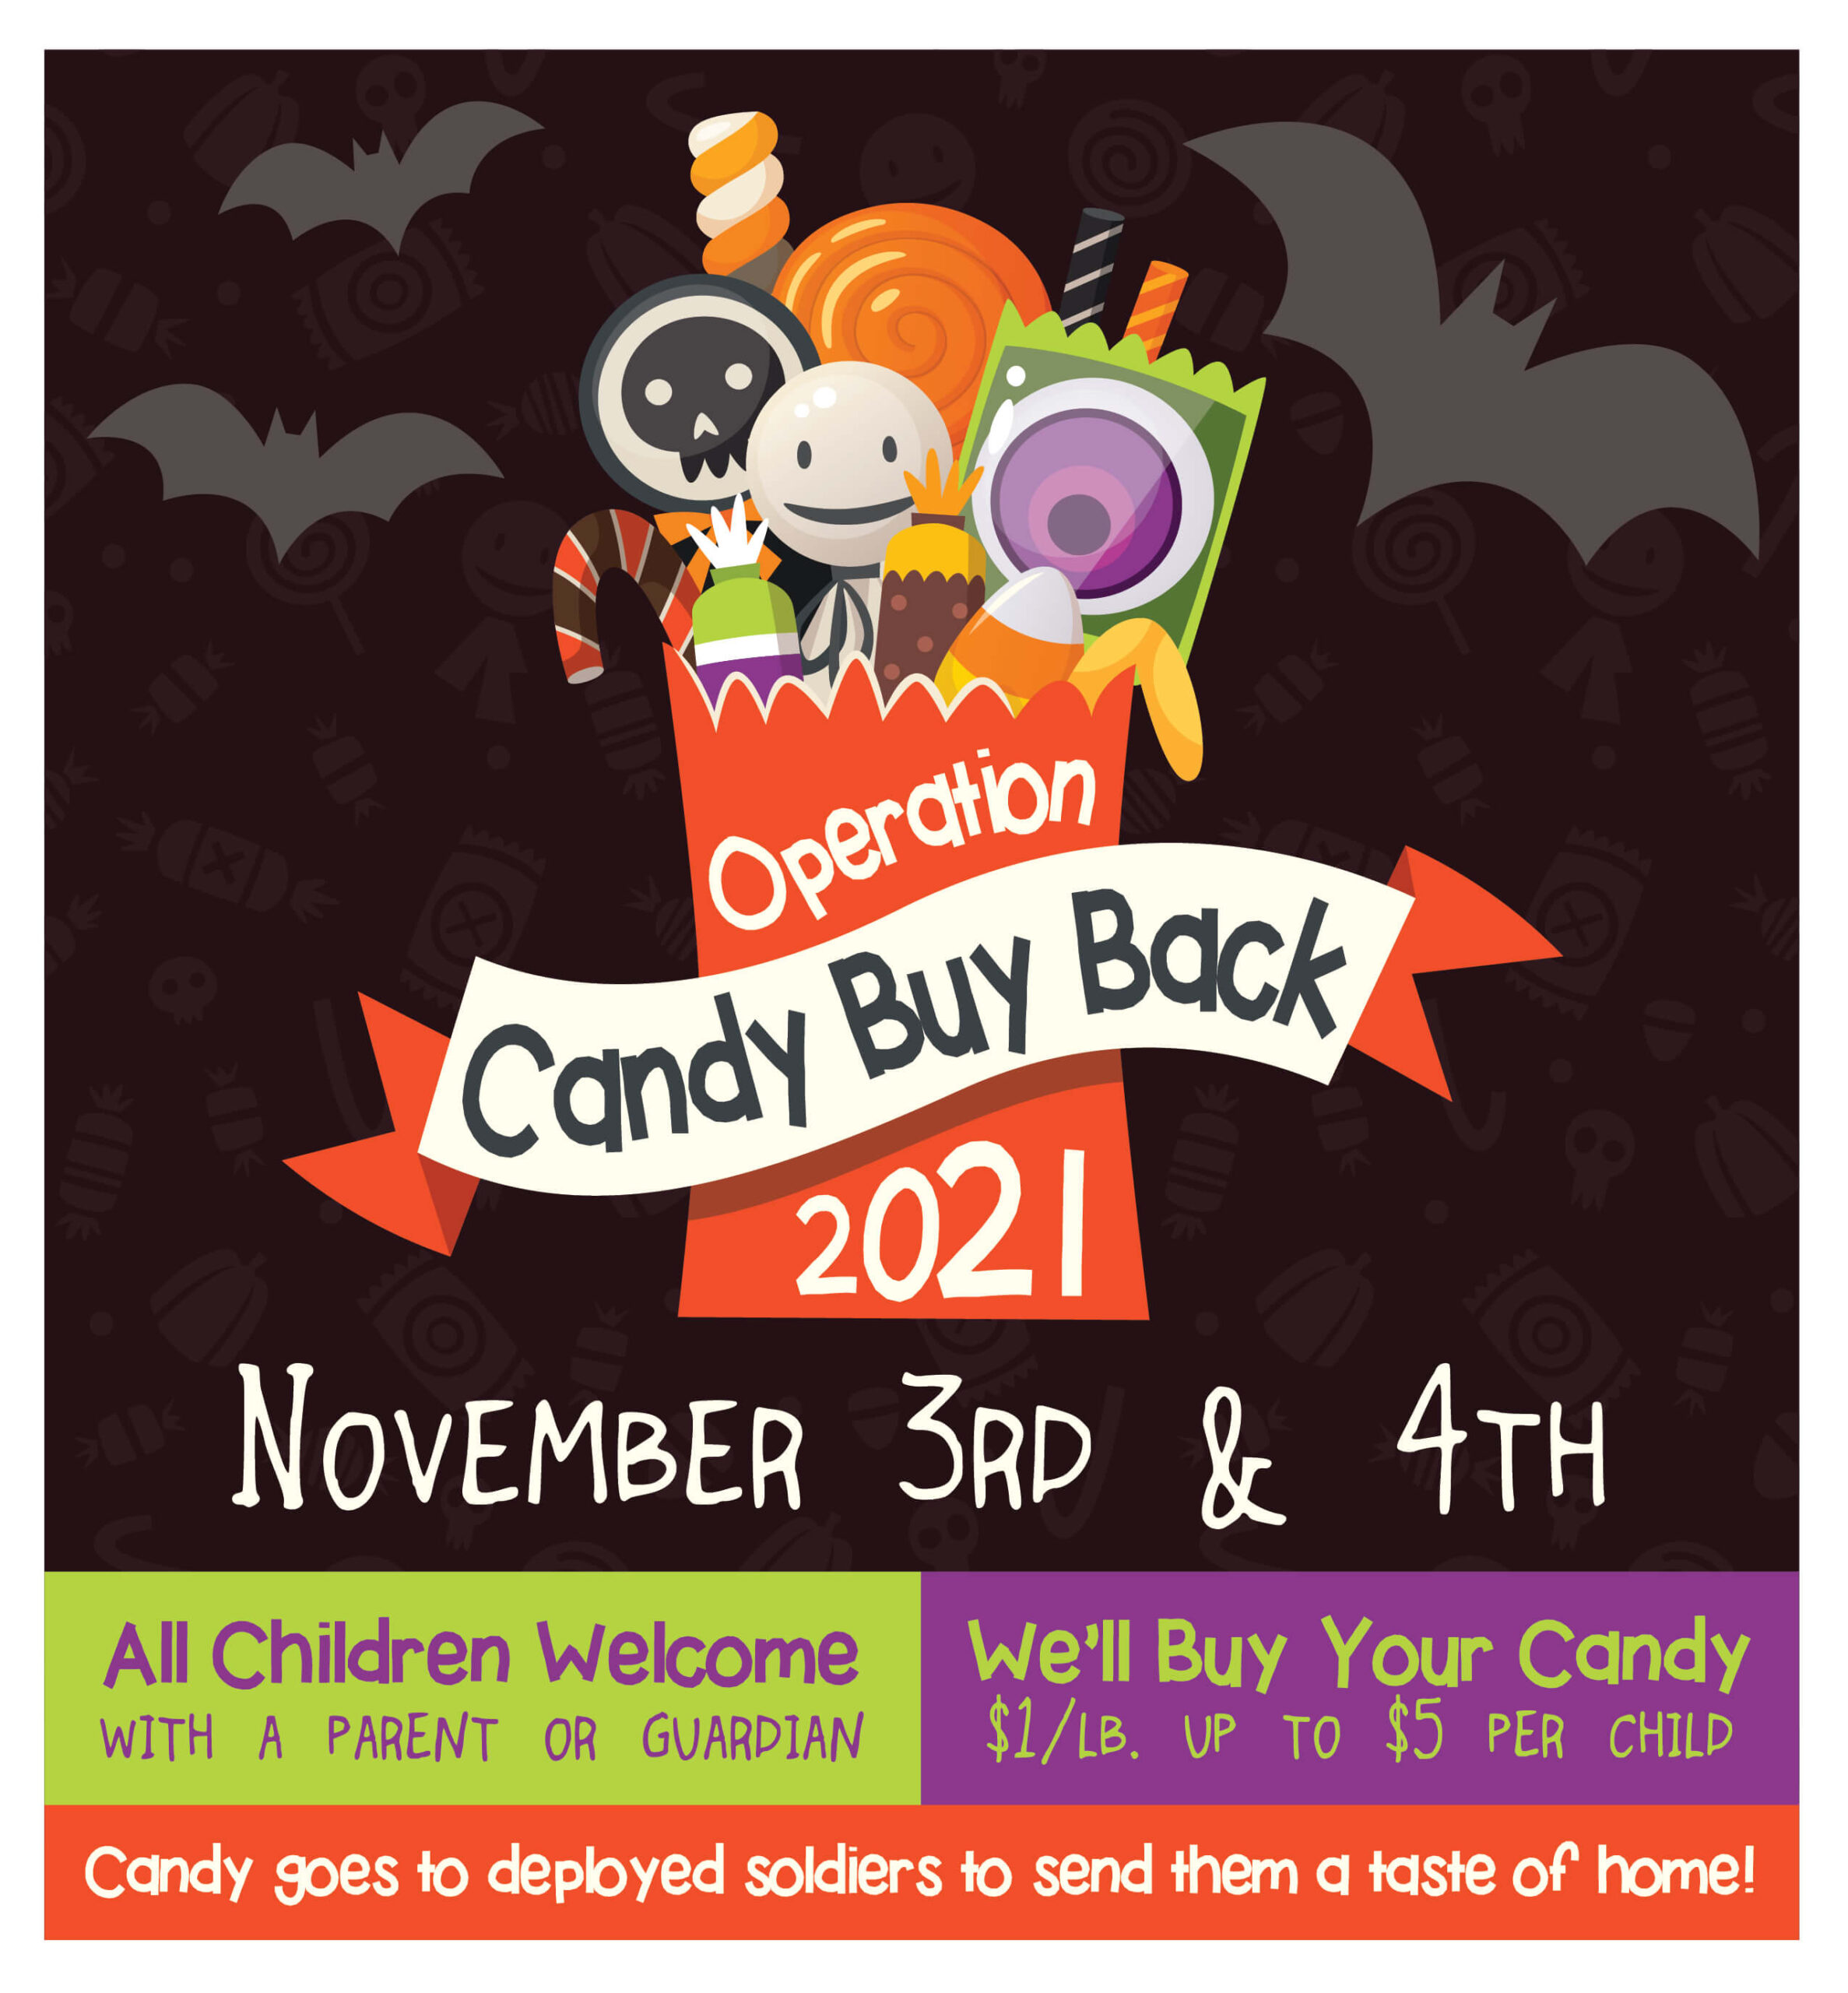 2021 Candy Buy Back